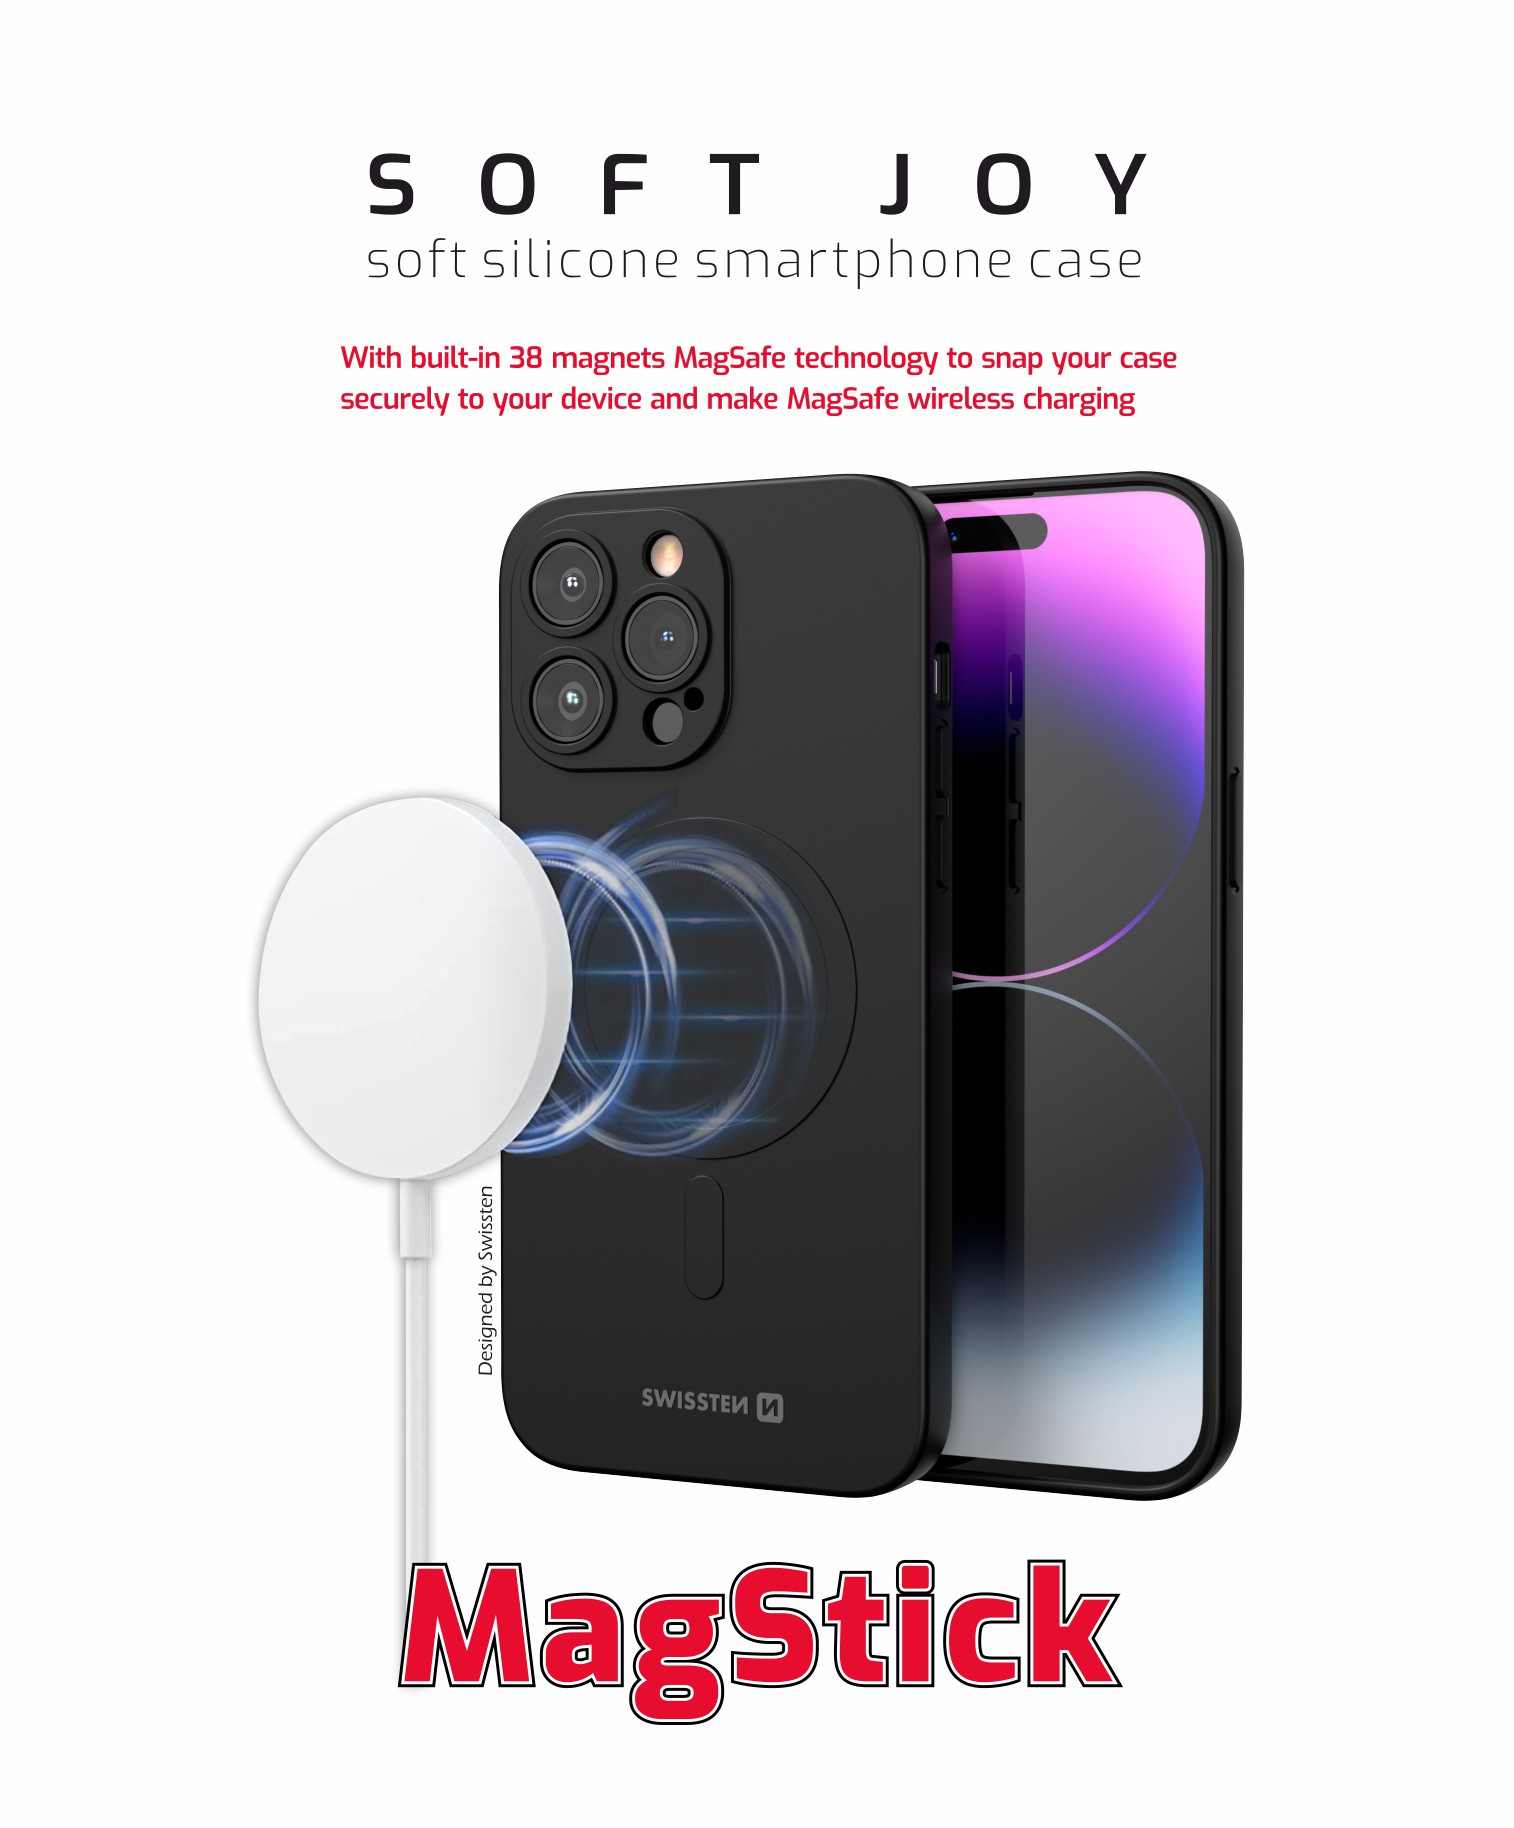 Swissten iPhone 13 Mini Soft Joy Magstick Case - 35500107 - For Magsafe Charging - Black